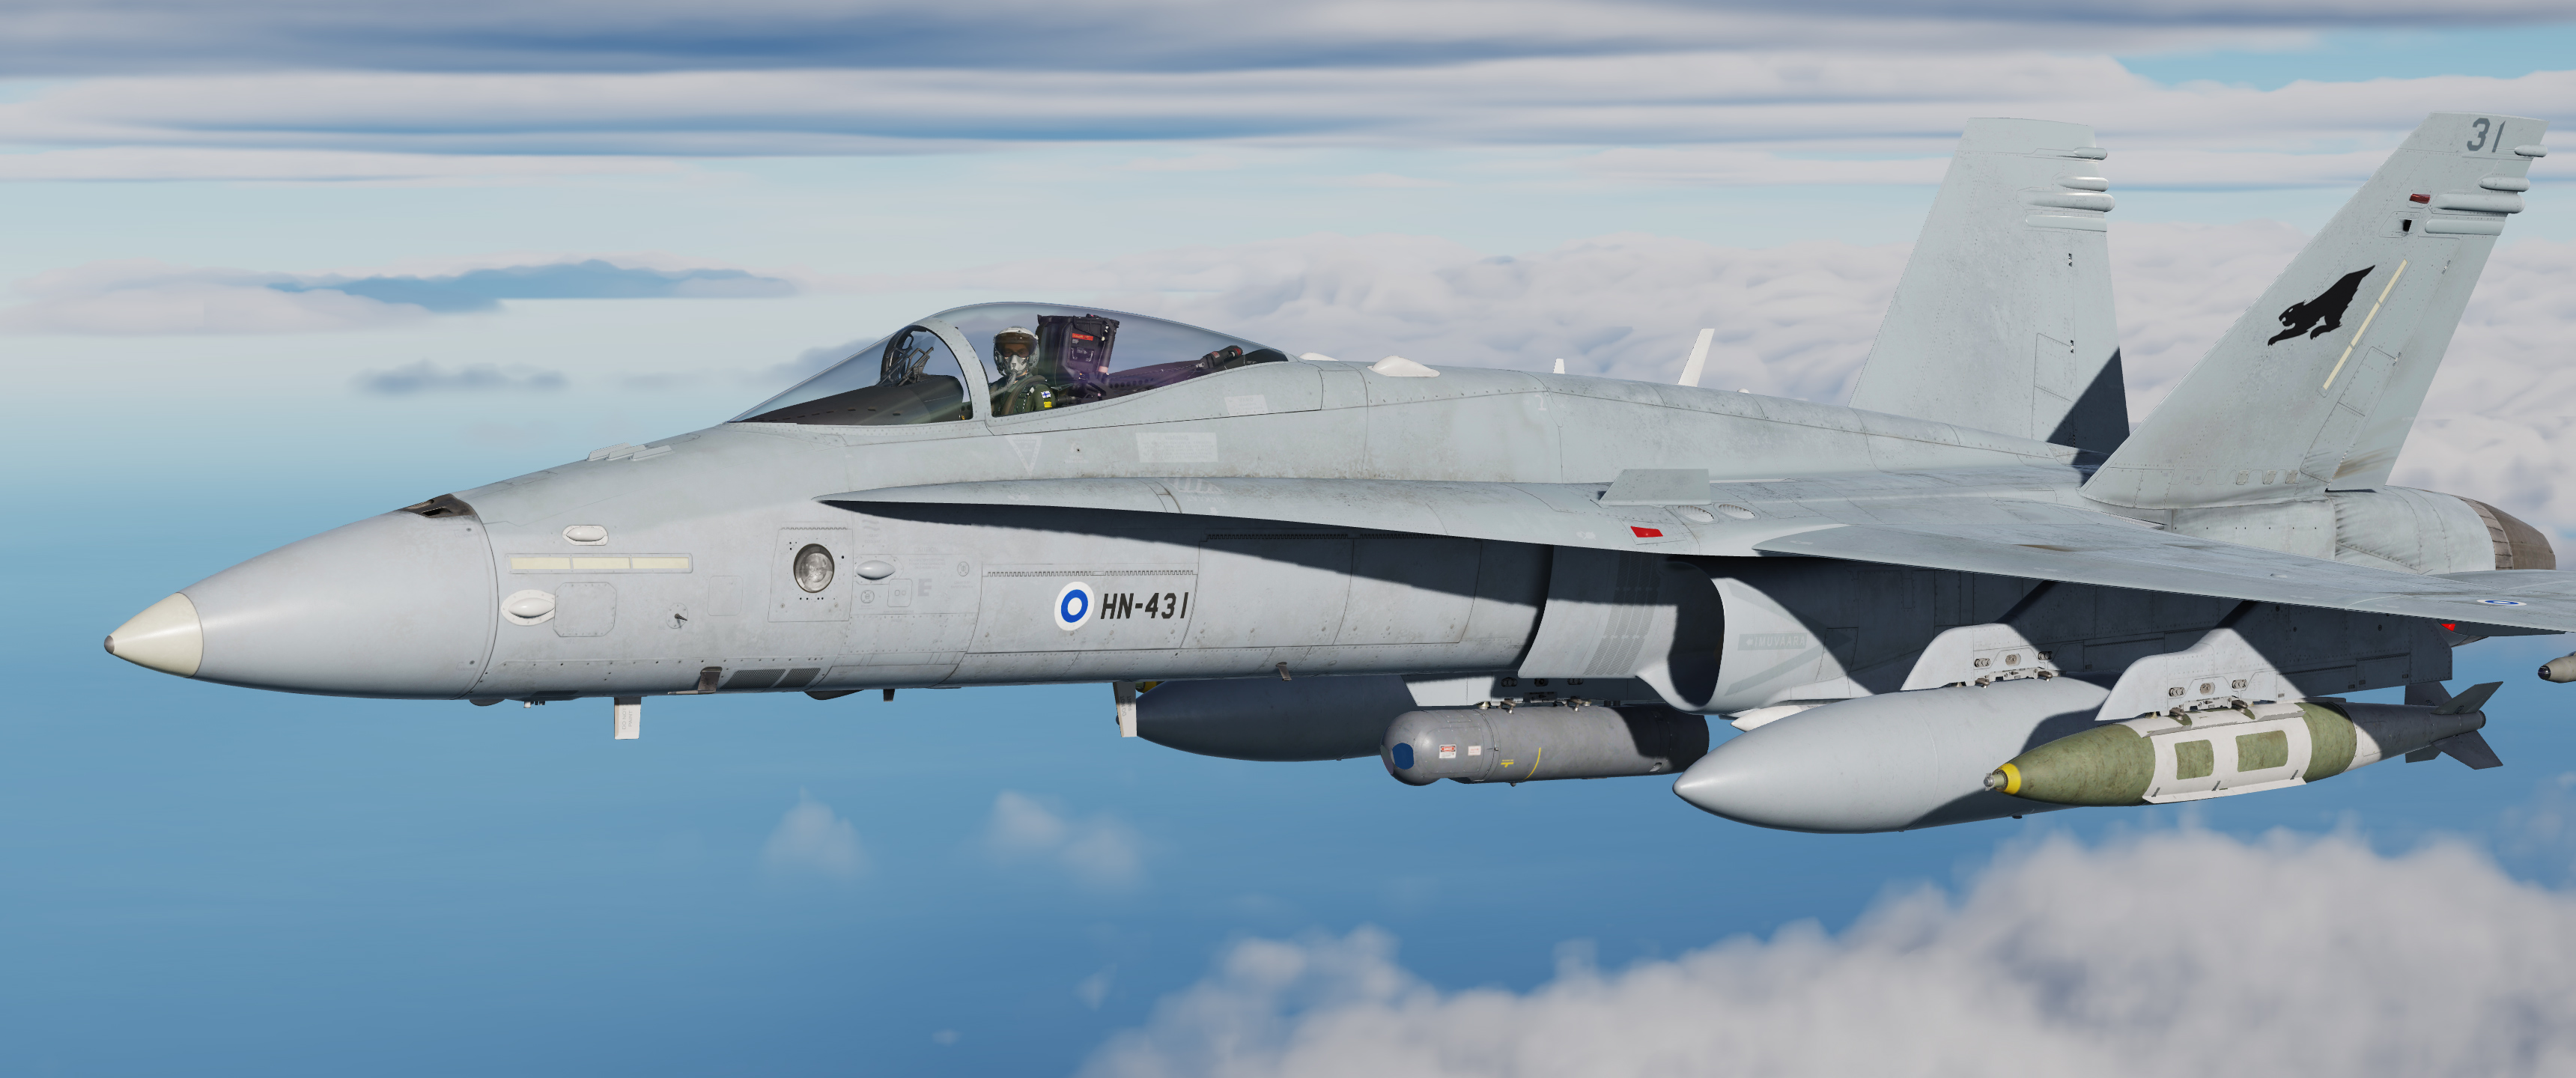 Finnish Air Force F-18C Skin Pack v.1.2